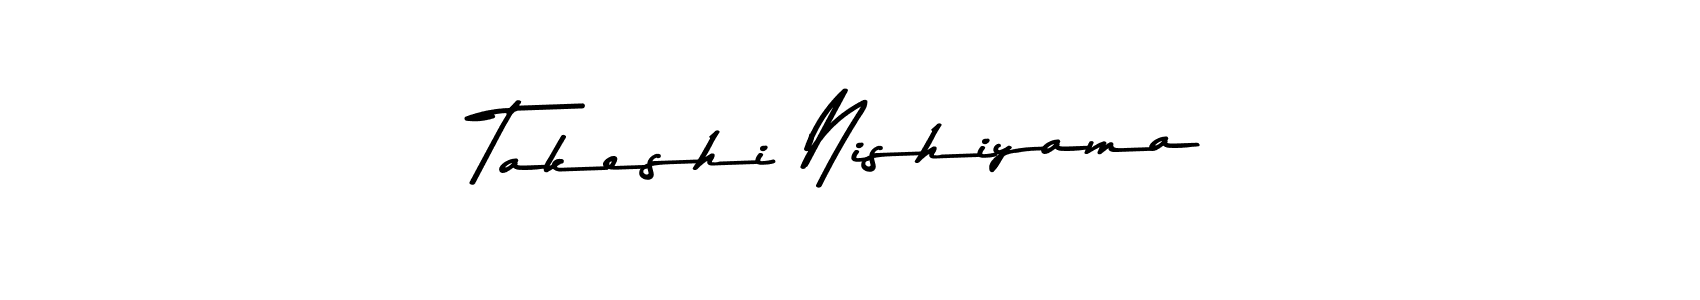 How to Draw Takeshi Nishiyama signature style? Asem Kandis PERSONAL USE is a latest design signature styles for name Takeshi Nishiyama. Takeshi Nishiyama signature style 9 images and pictures png